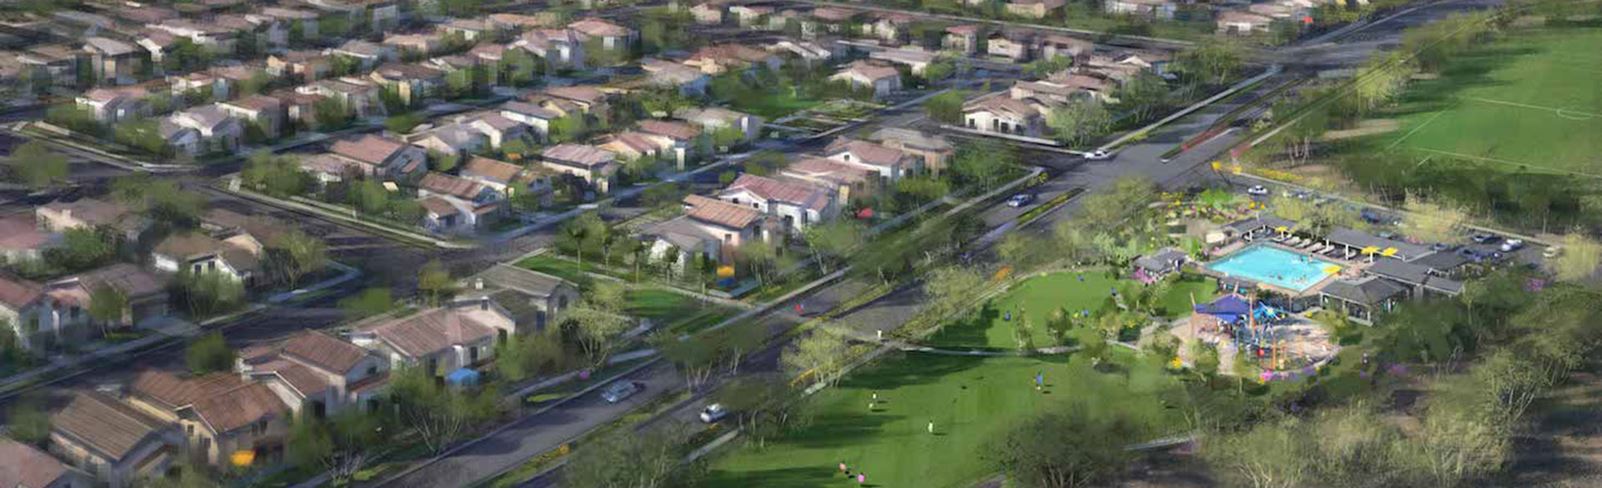 Aerial image of Alamar community showing the Alamar Park in Avondale, AZ